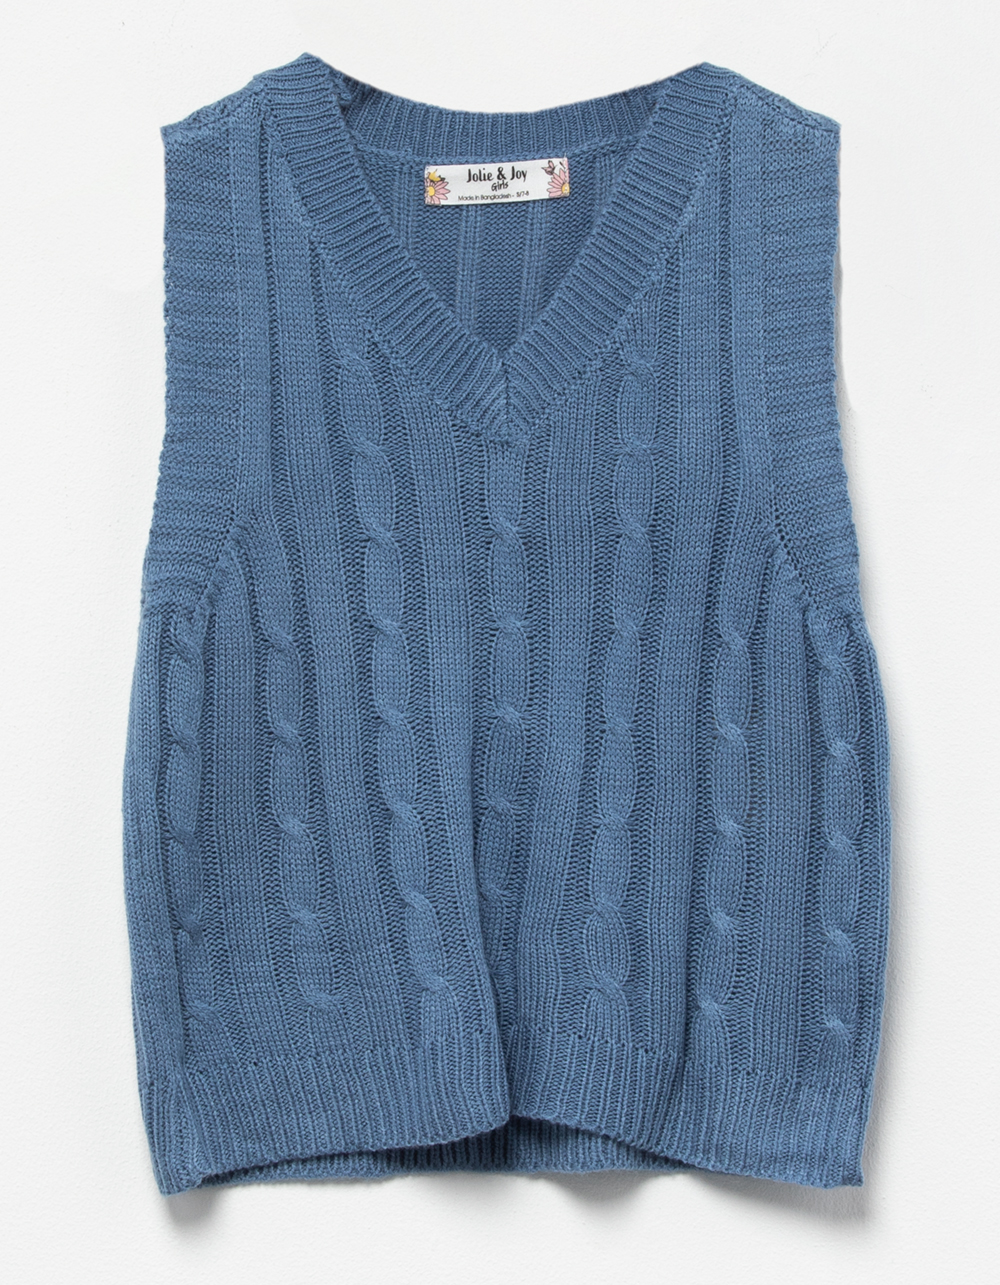 JOLIE & JOY Girls Cable Sweater Vest - BLUE | Tillys